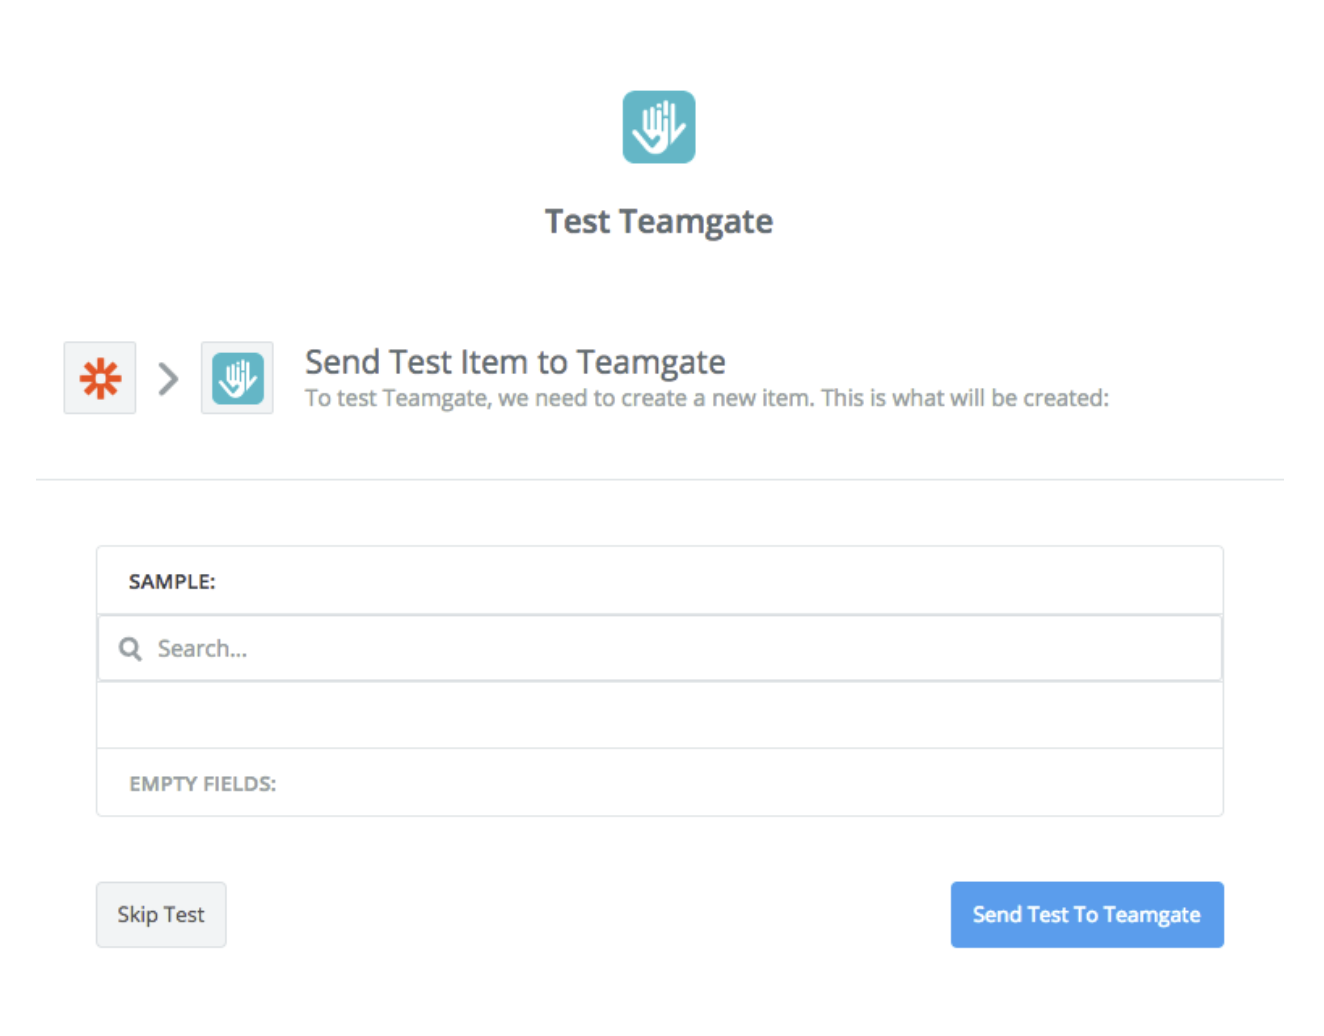 Send-test-to-Teamgate-Facebook-ad-Zapier.png